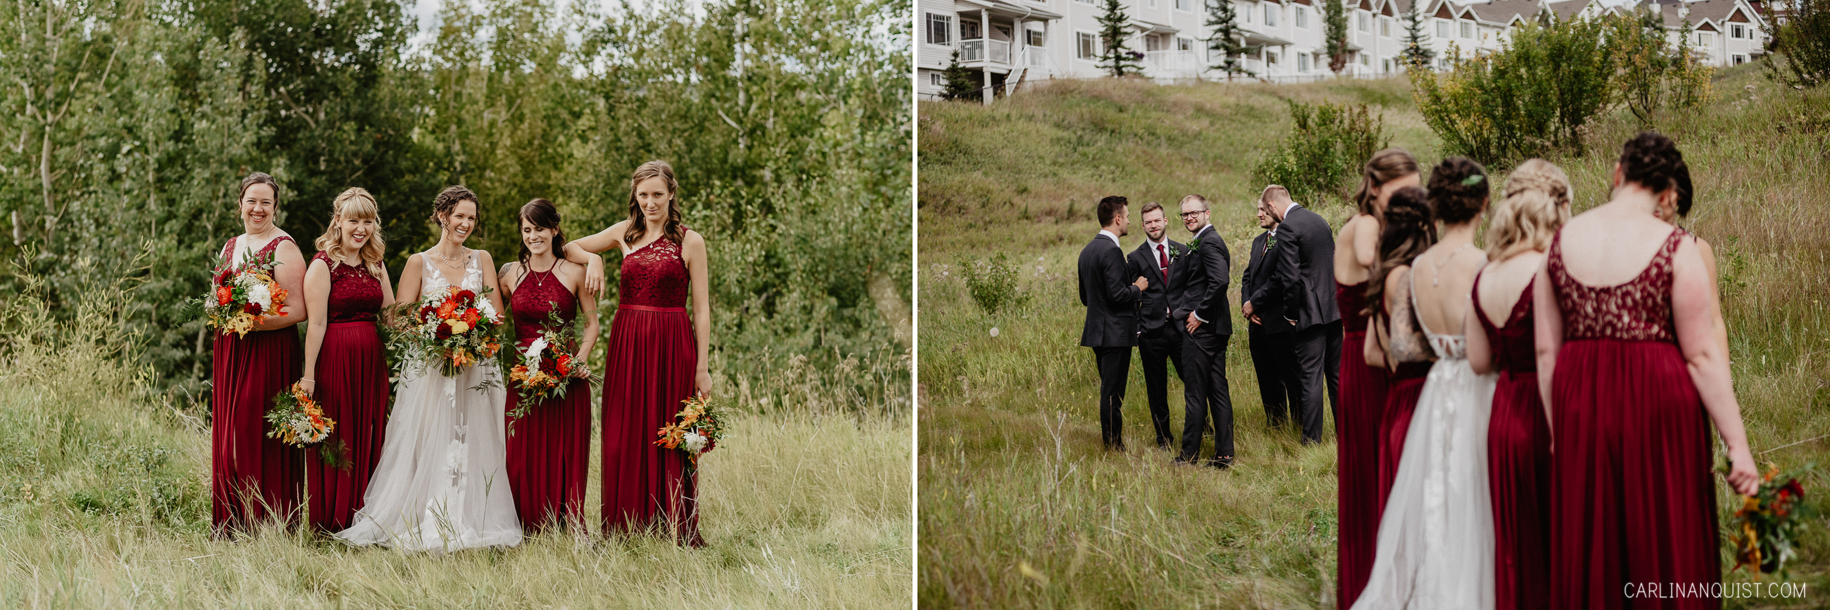 Bride & Bridesmaids | Calgary Wedding Photographers